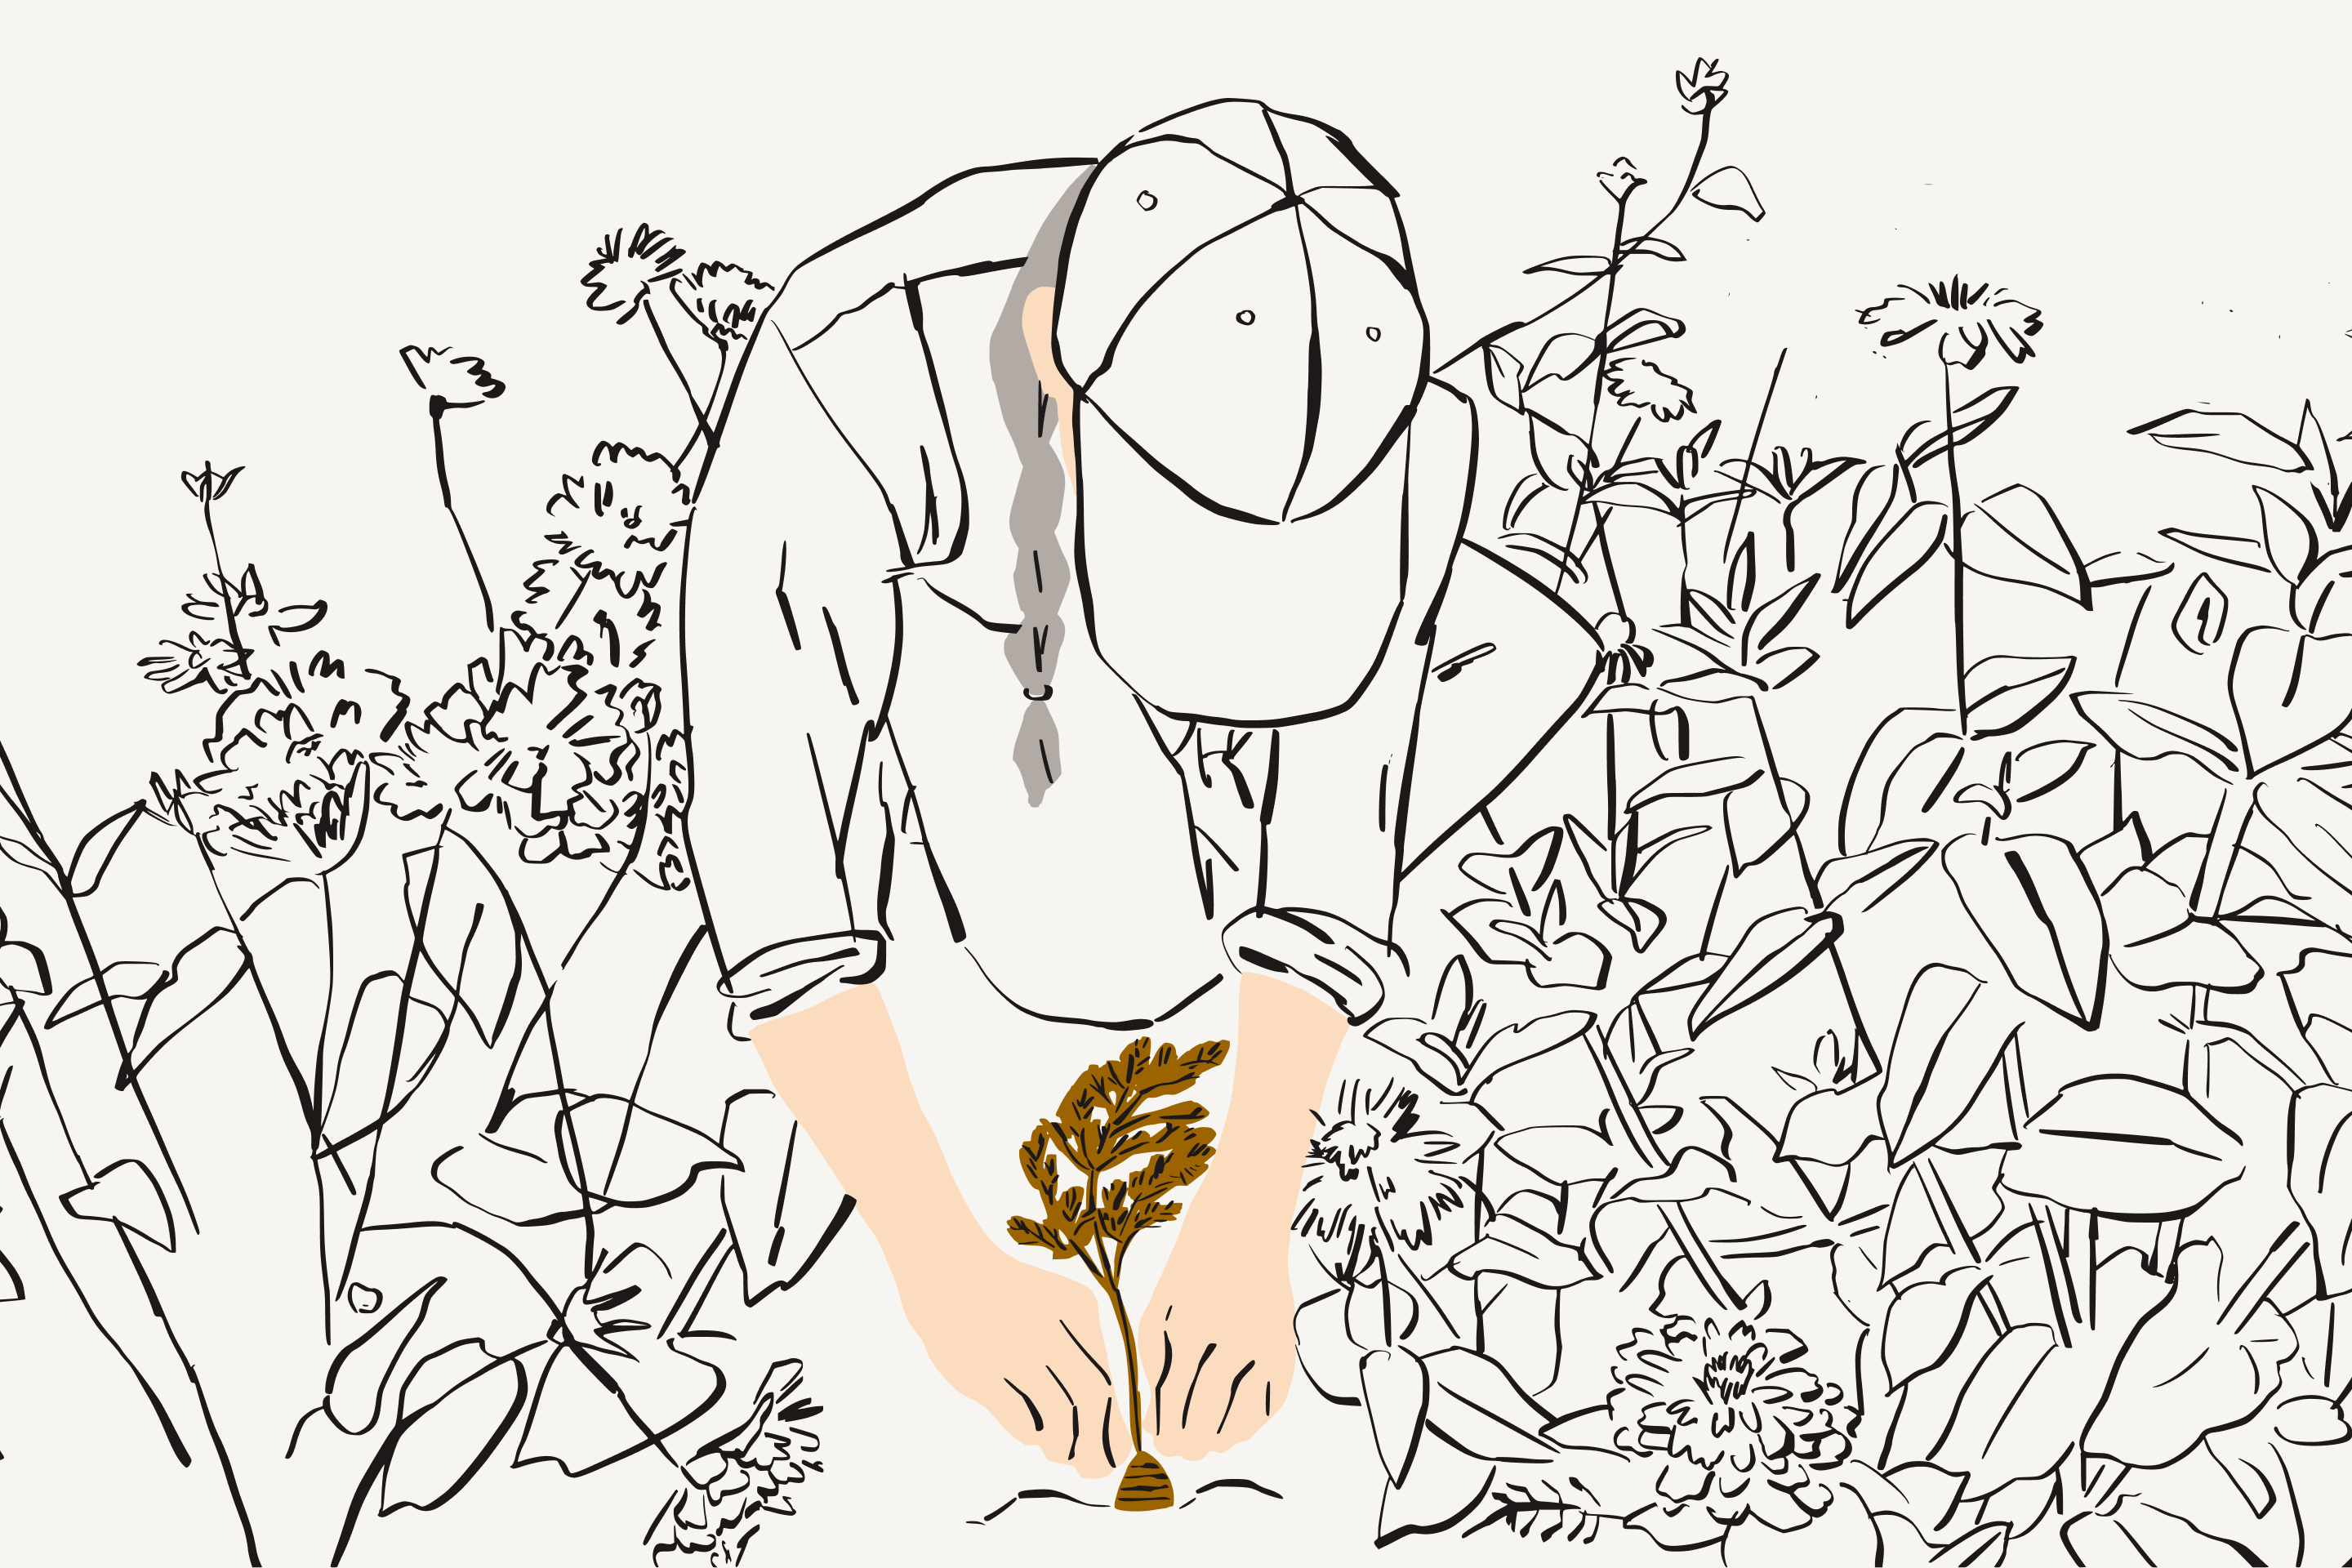 Ilustrasi menunjukkan seorang wanita dikelilingi oleh dedaunan dan menanam sayuran akar